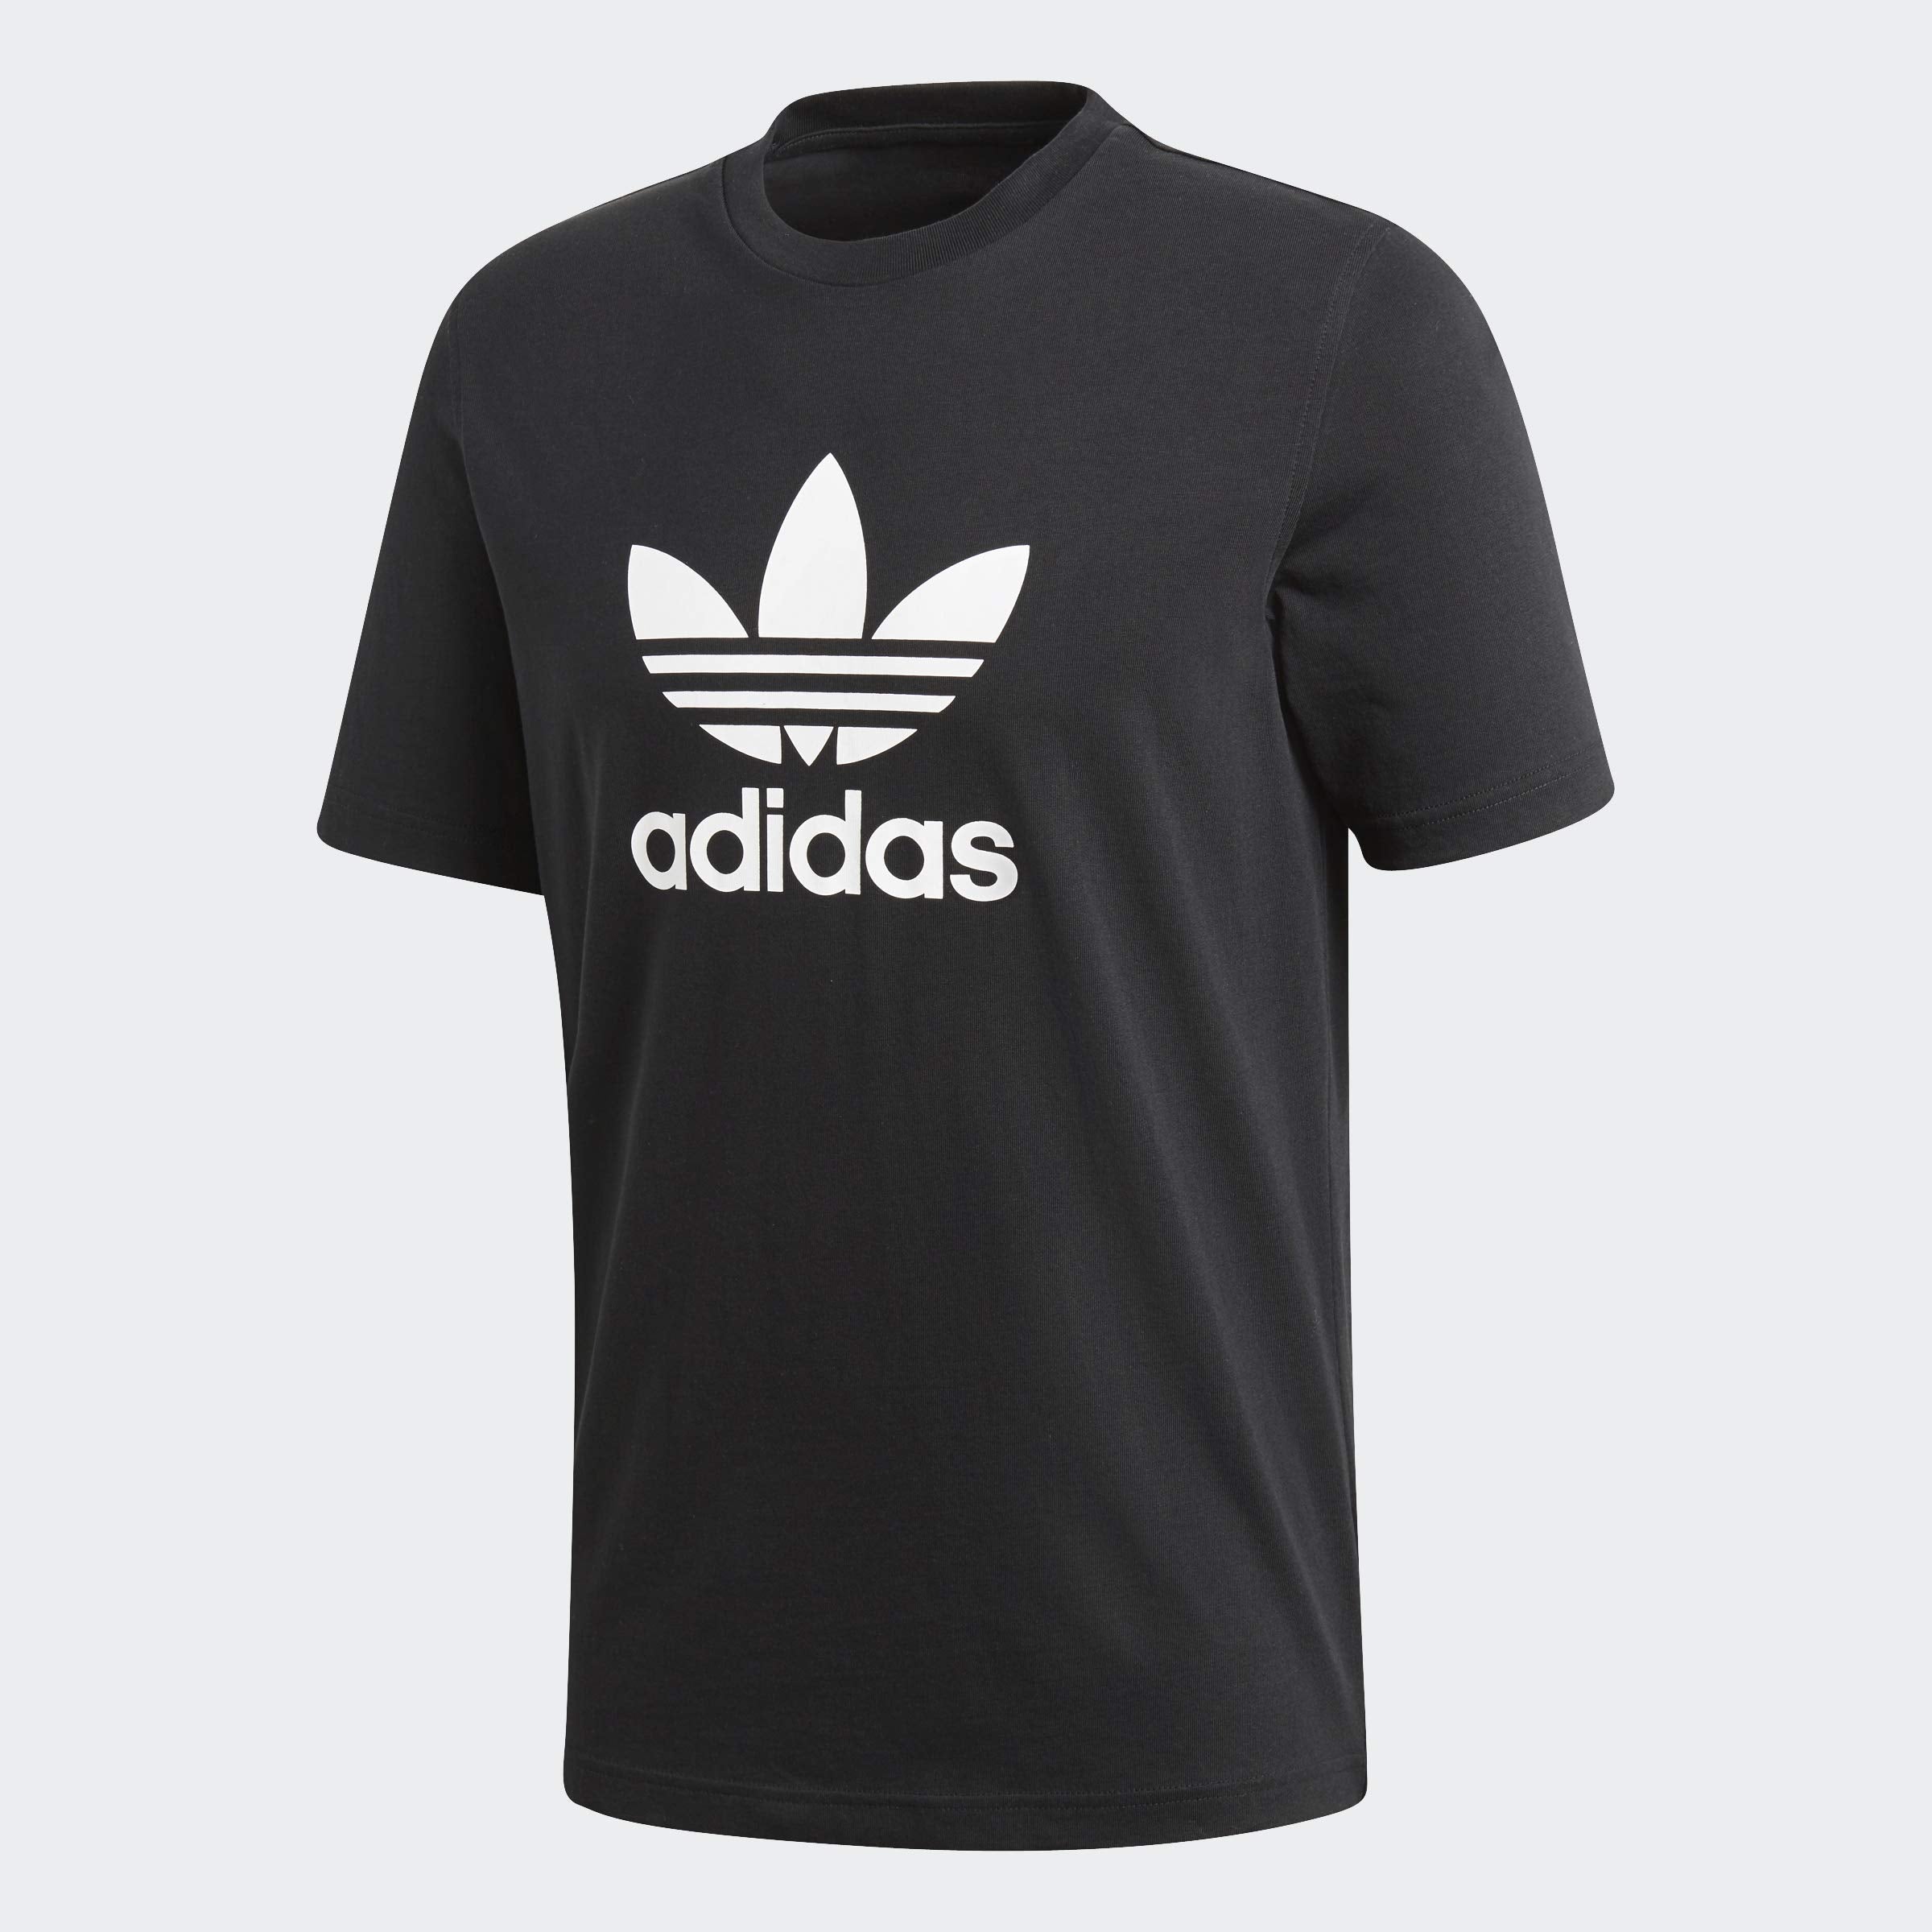 adidas Originals Men's Trefoil Tee Shirt, Black